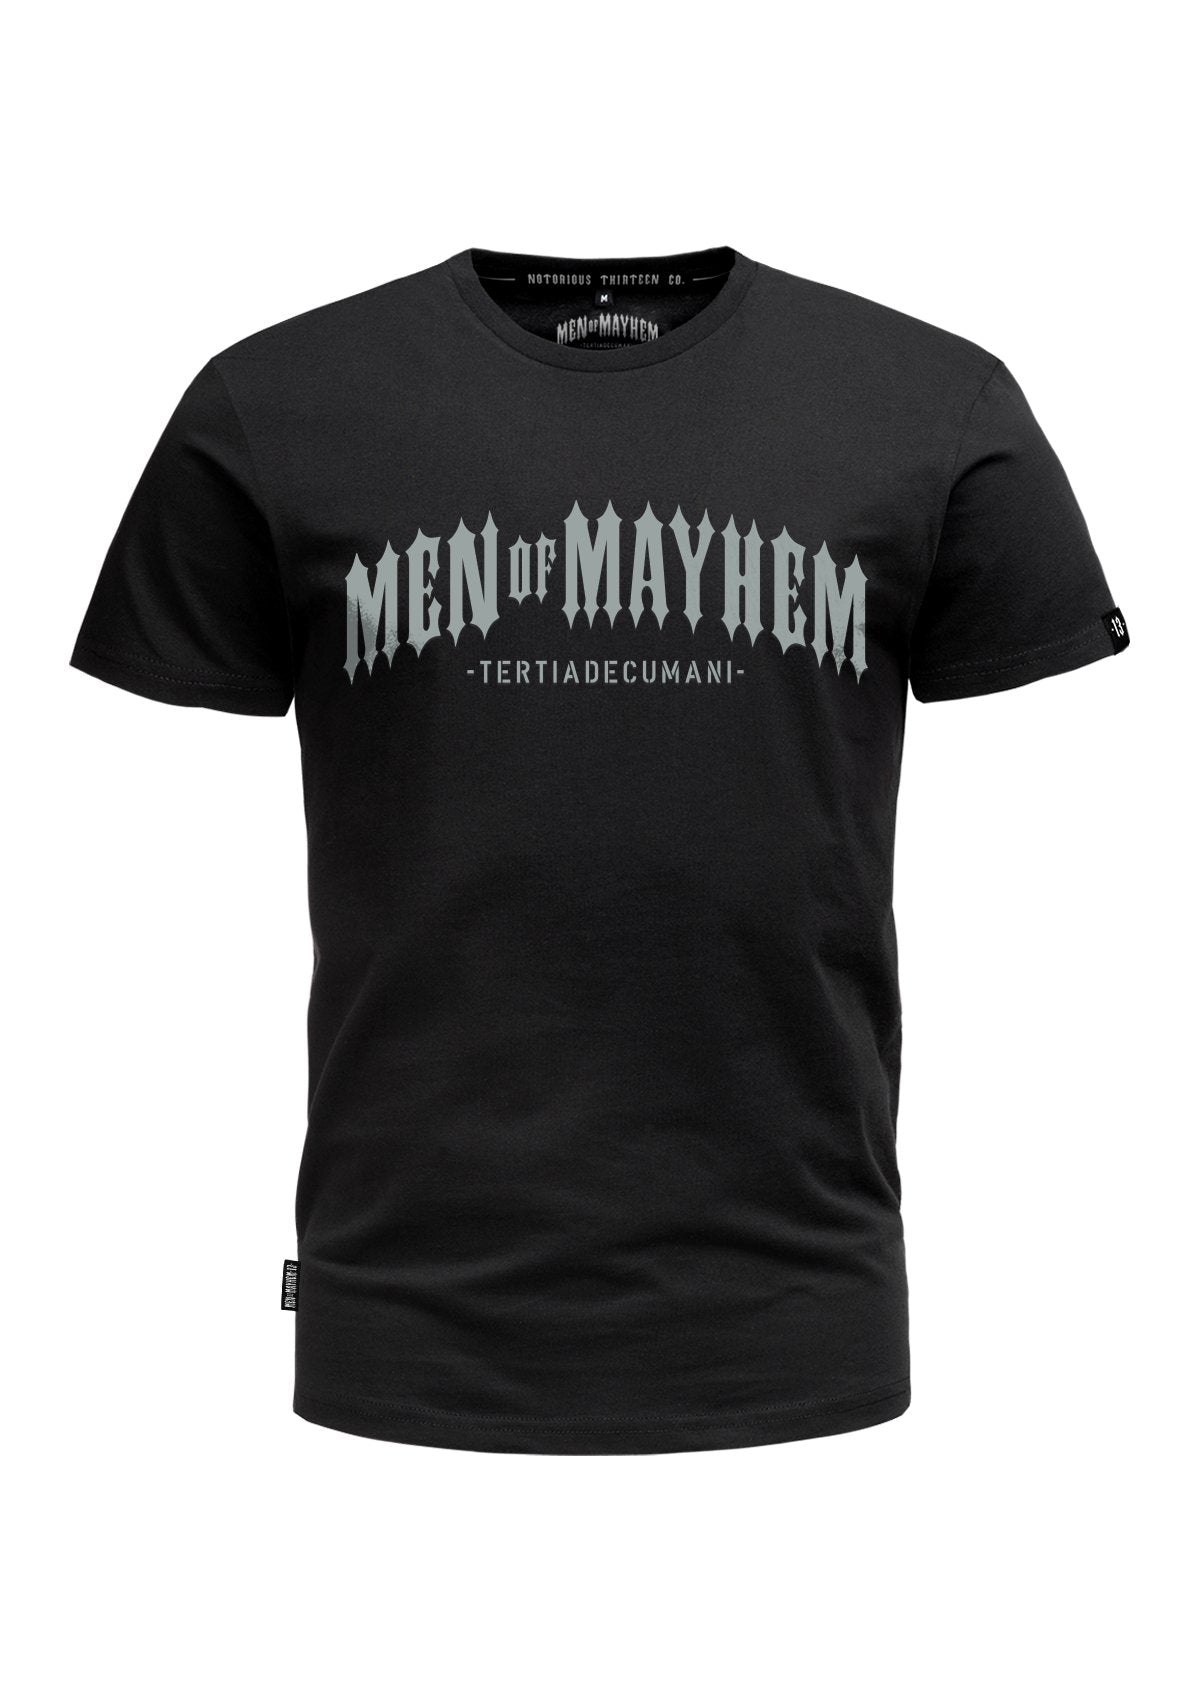 T-Shirt Mayhem Classic S/G - MEN OF MAYHEM - ALAIKO-EXCHANGES-MM-M-1010-MC-SG - black - Classic